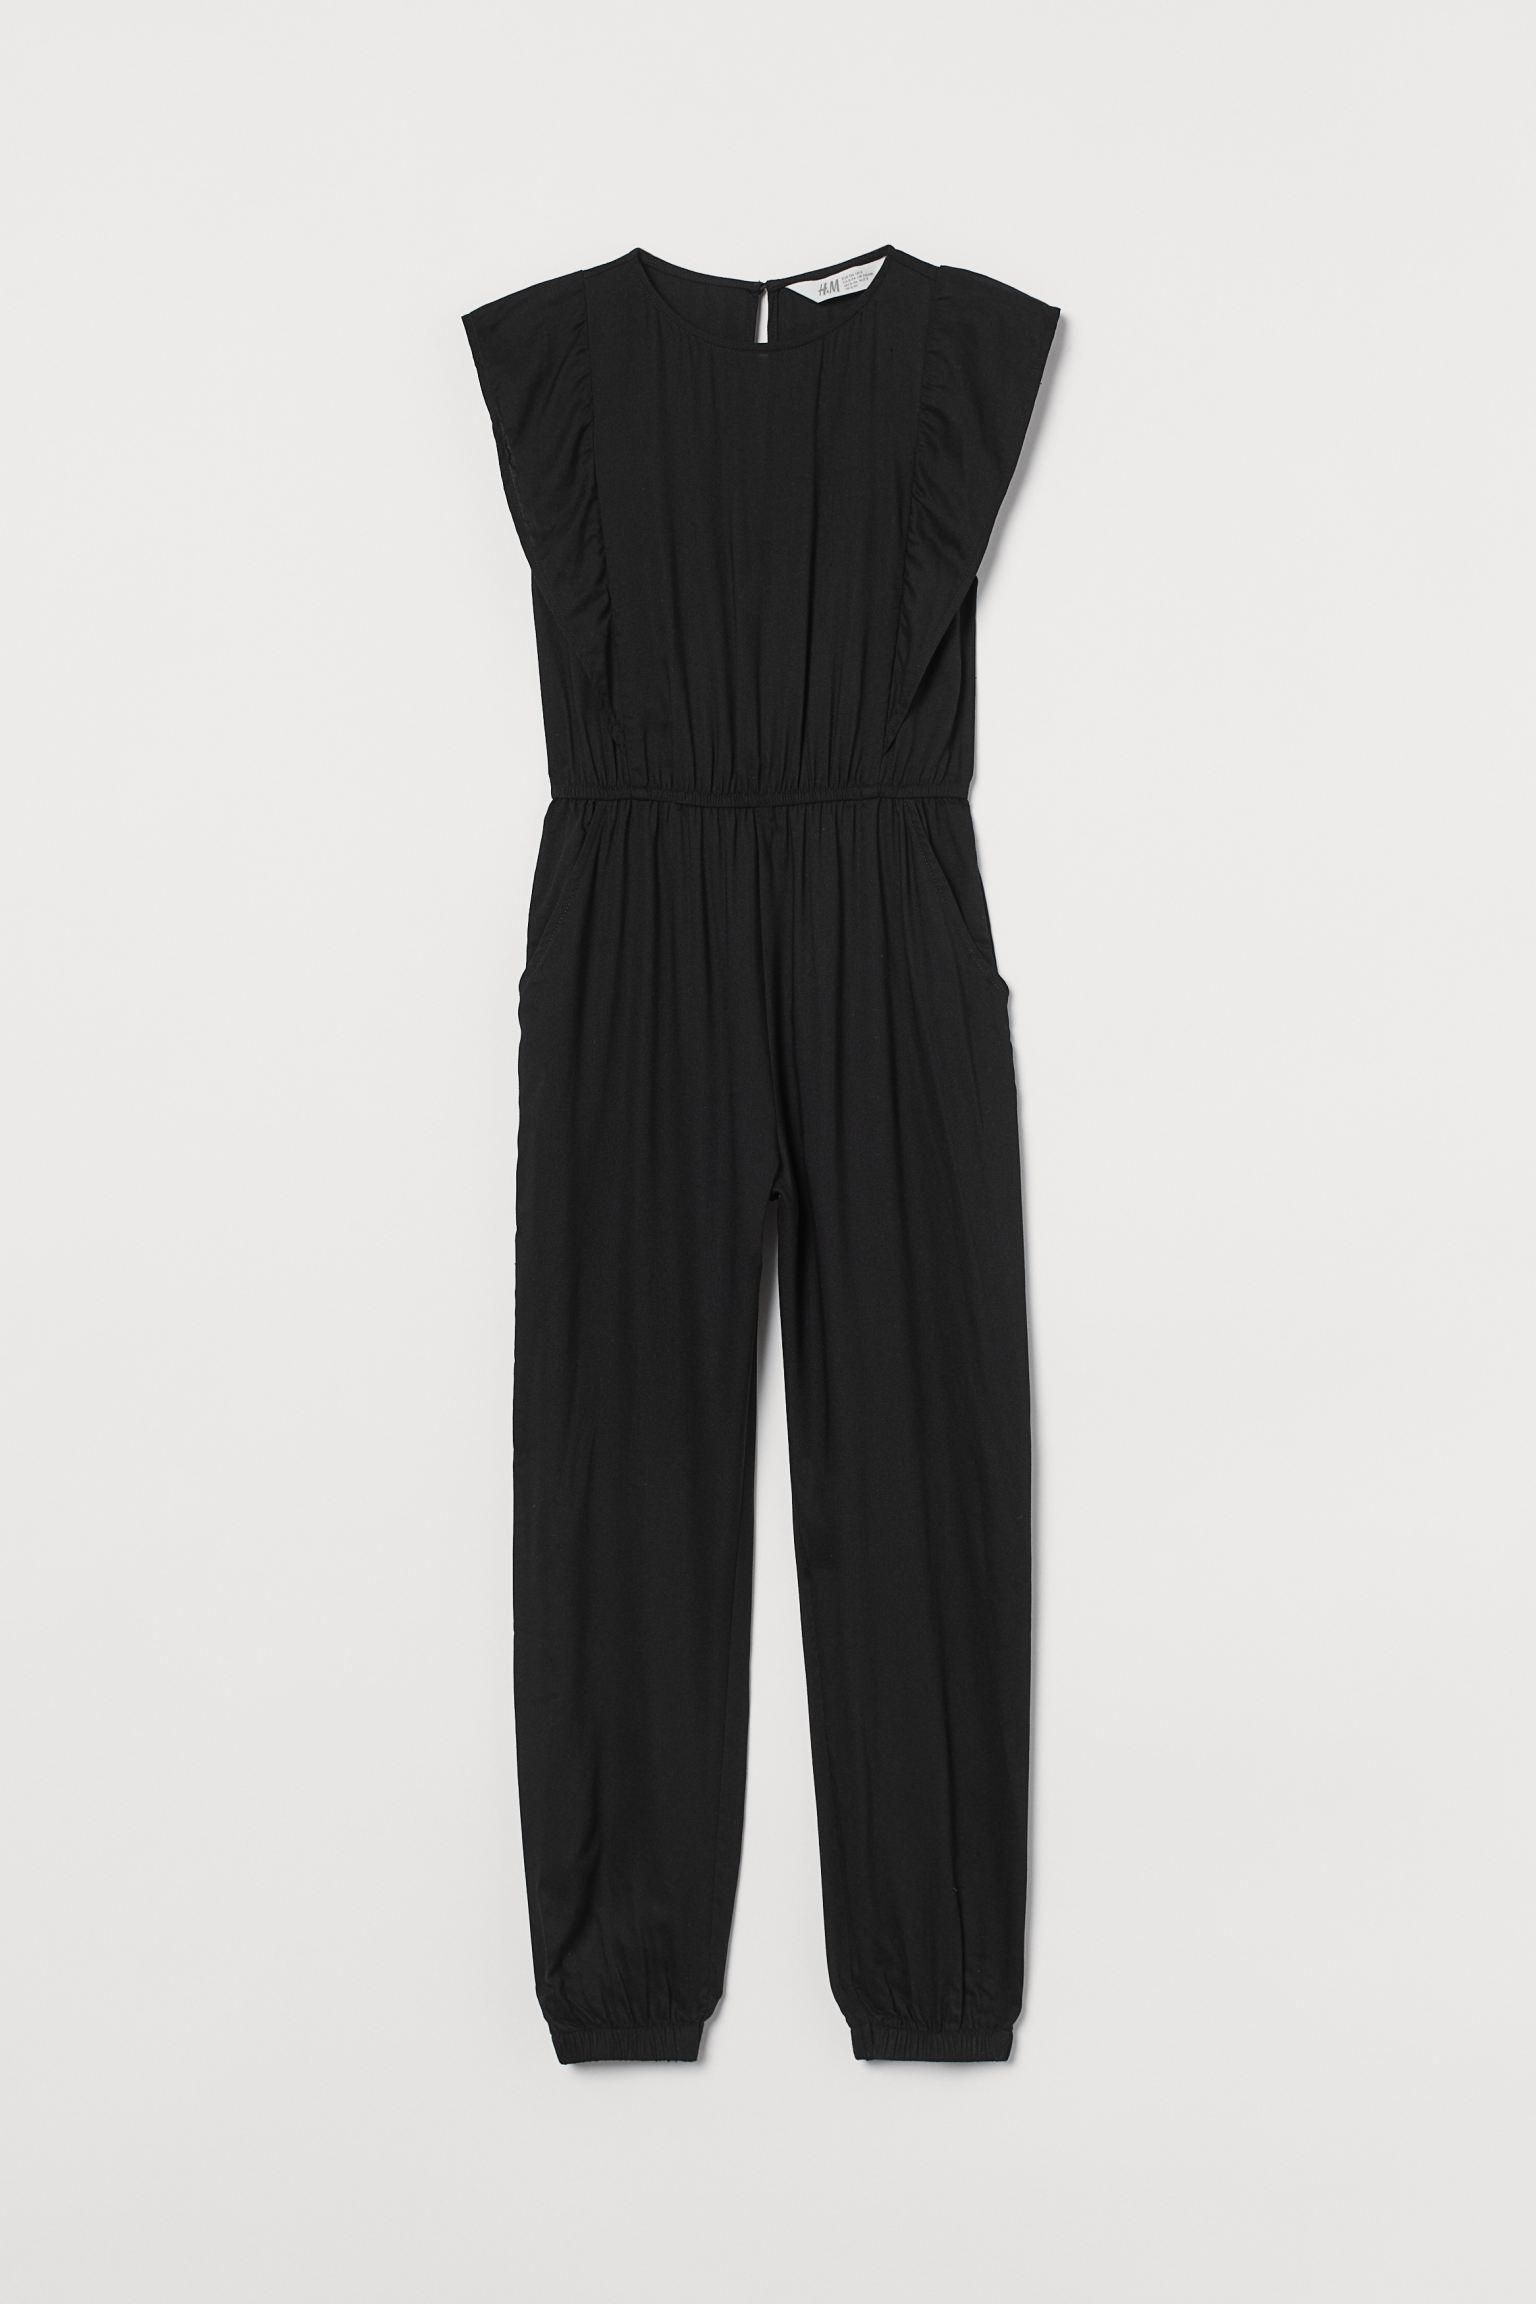 soft silk 1x Zara Basic Casual Classic Jumpsuit with Belt NEW Blue/Black